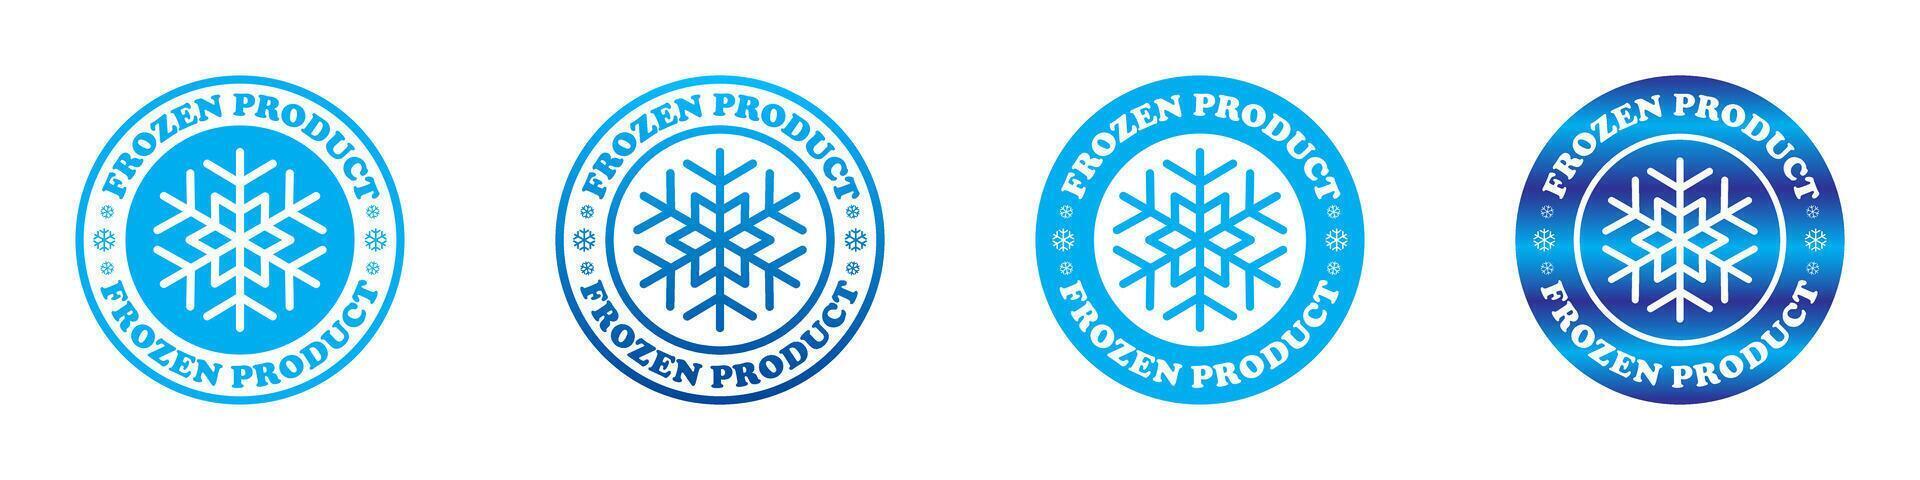 Frozen product icon set. Vector illustration.